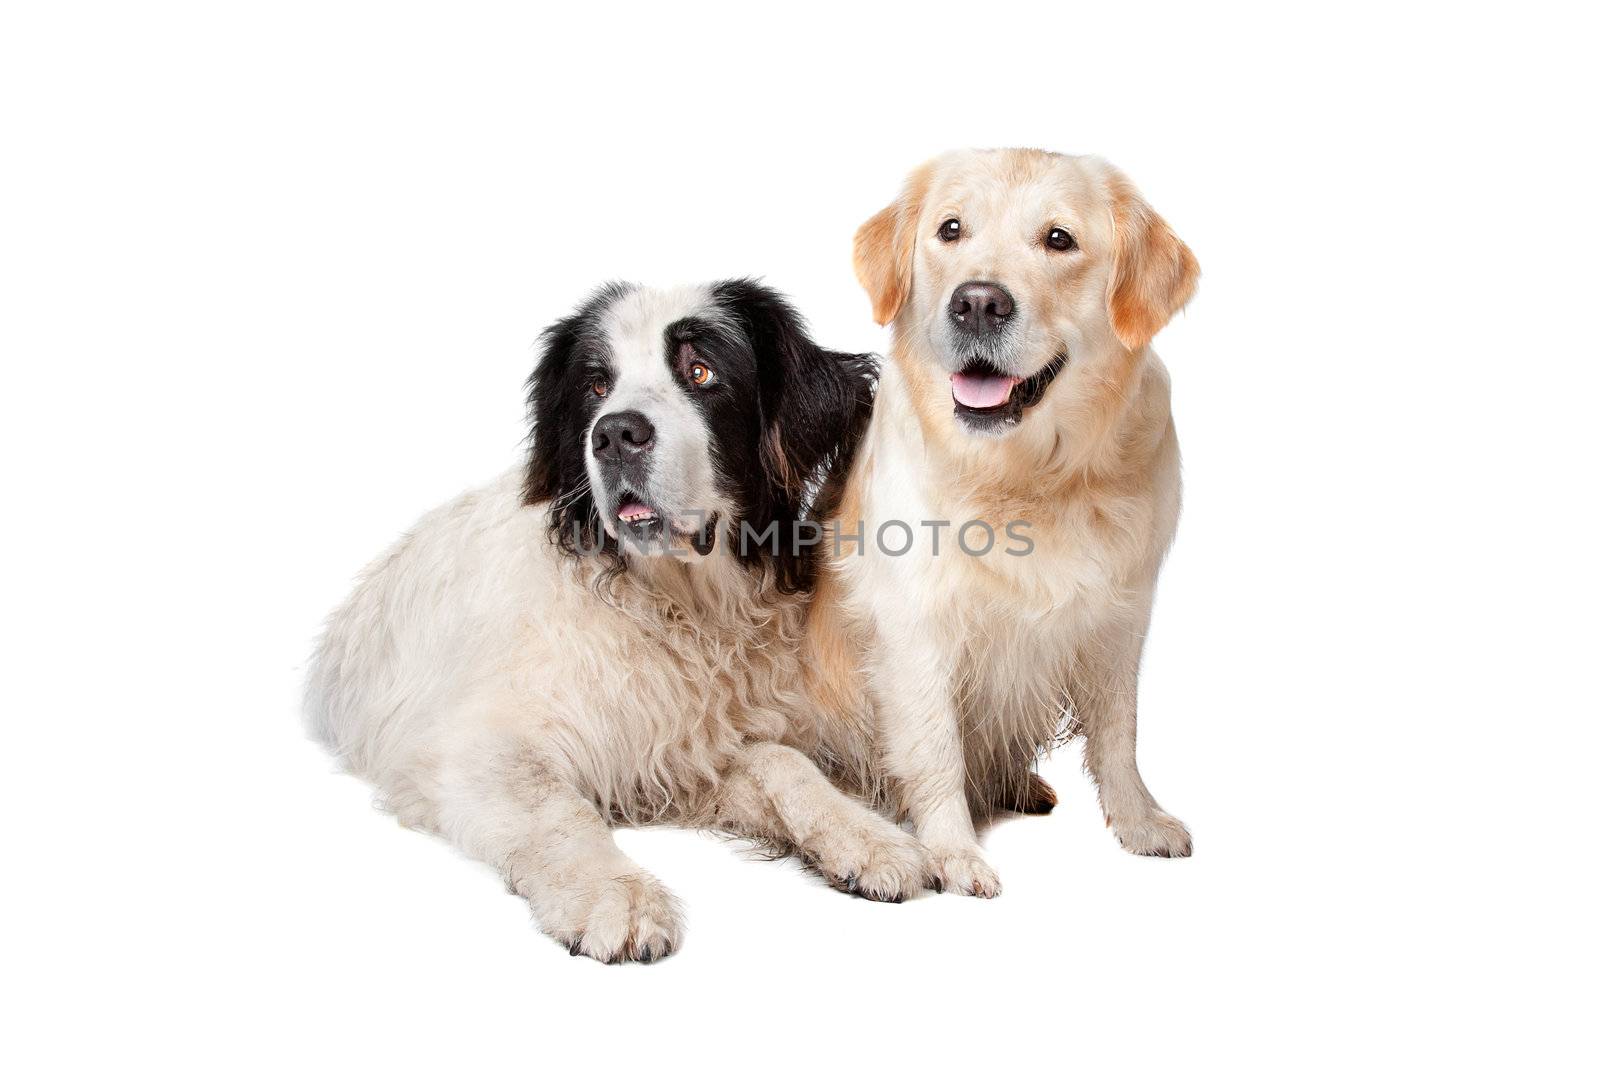 Landseer dog and a labrador retriever on a white background